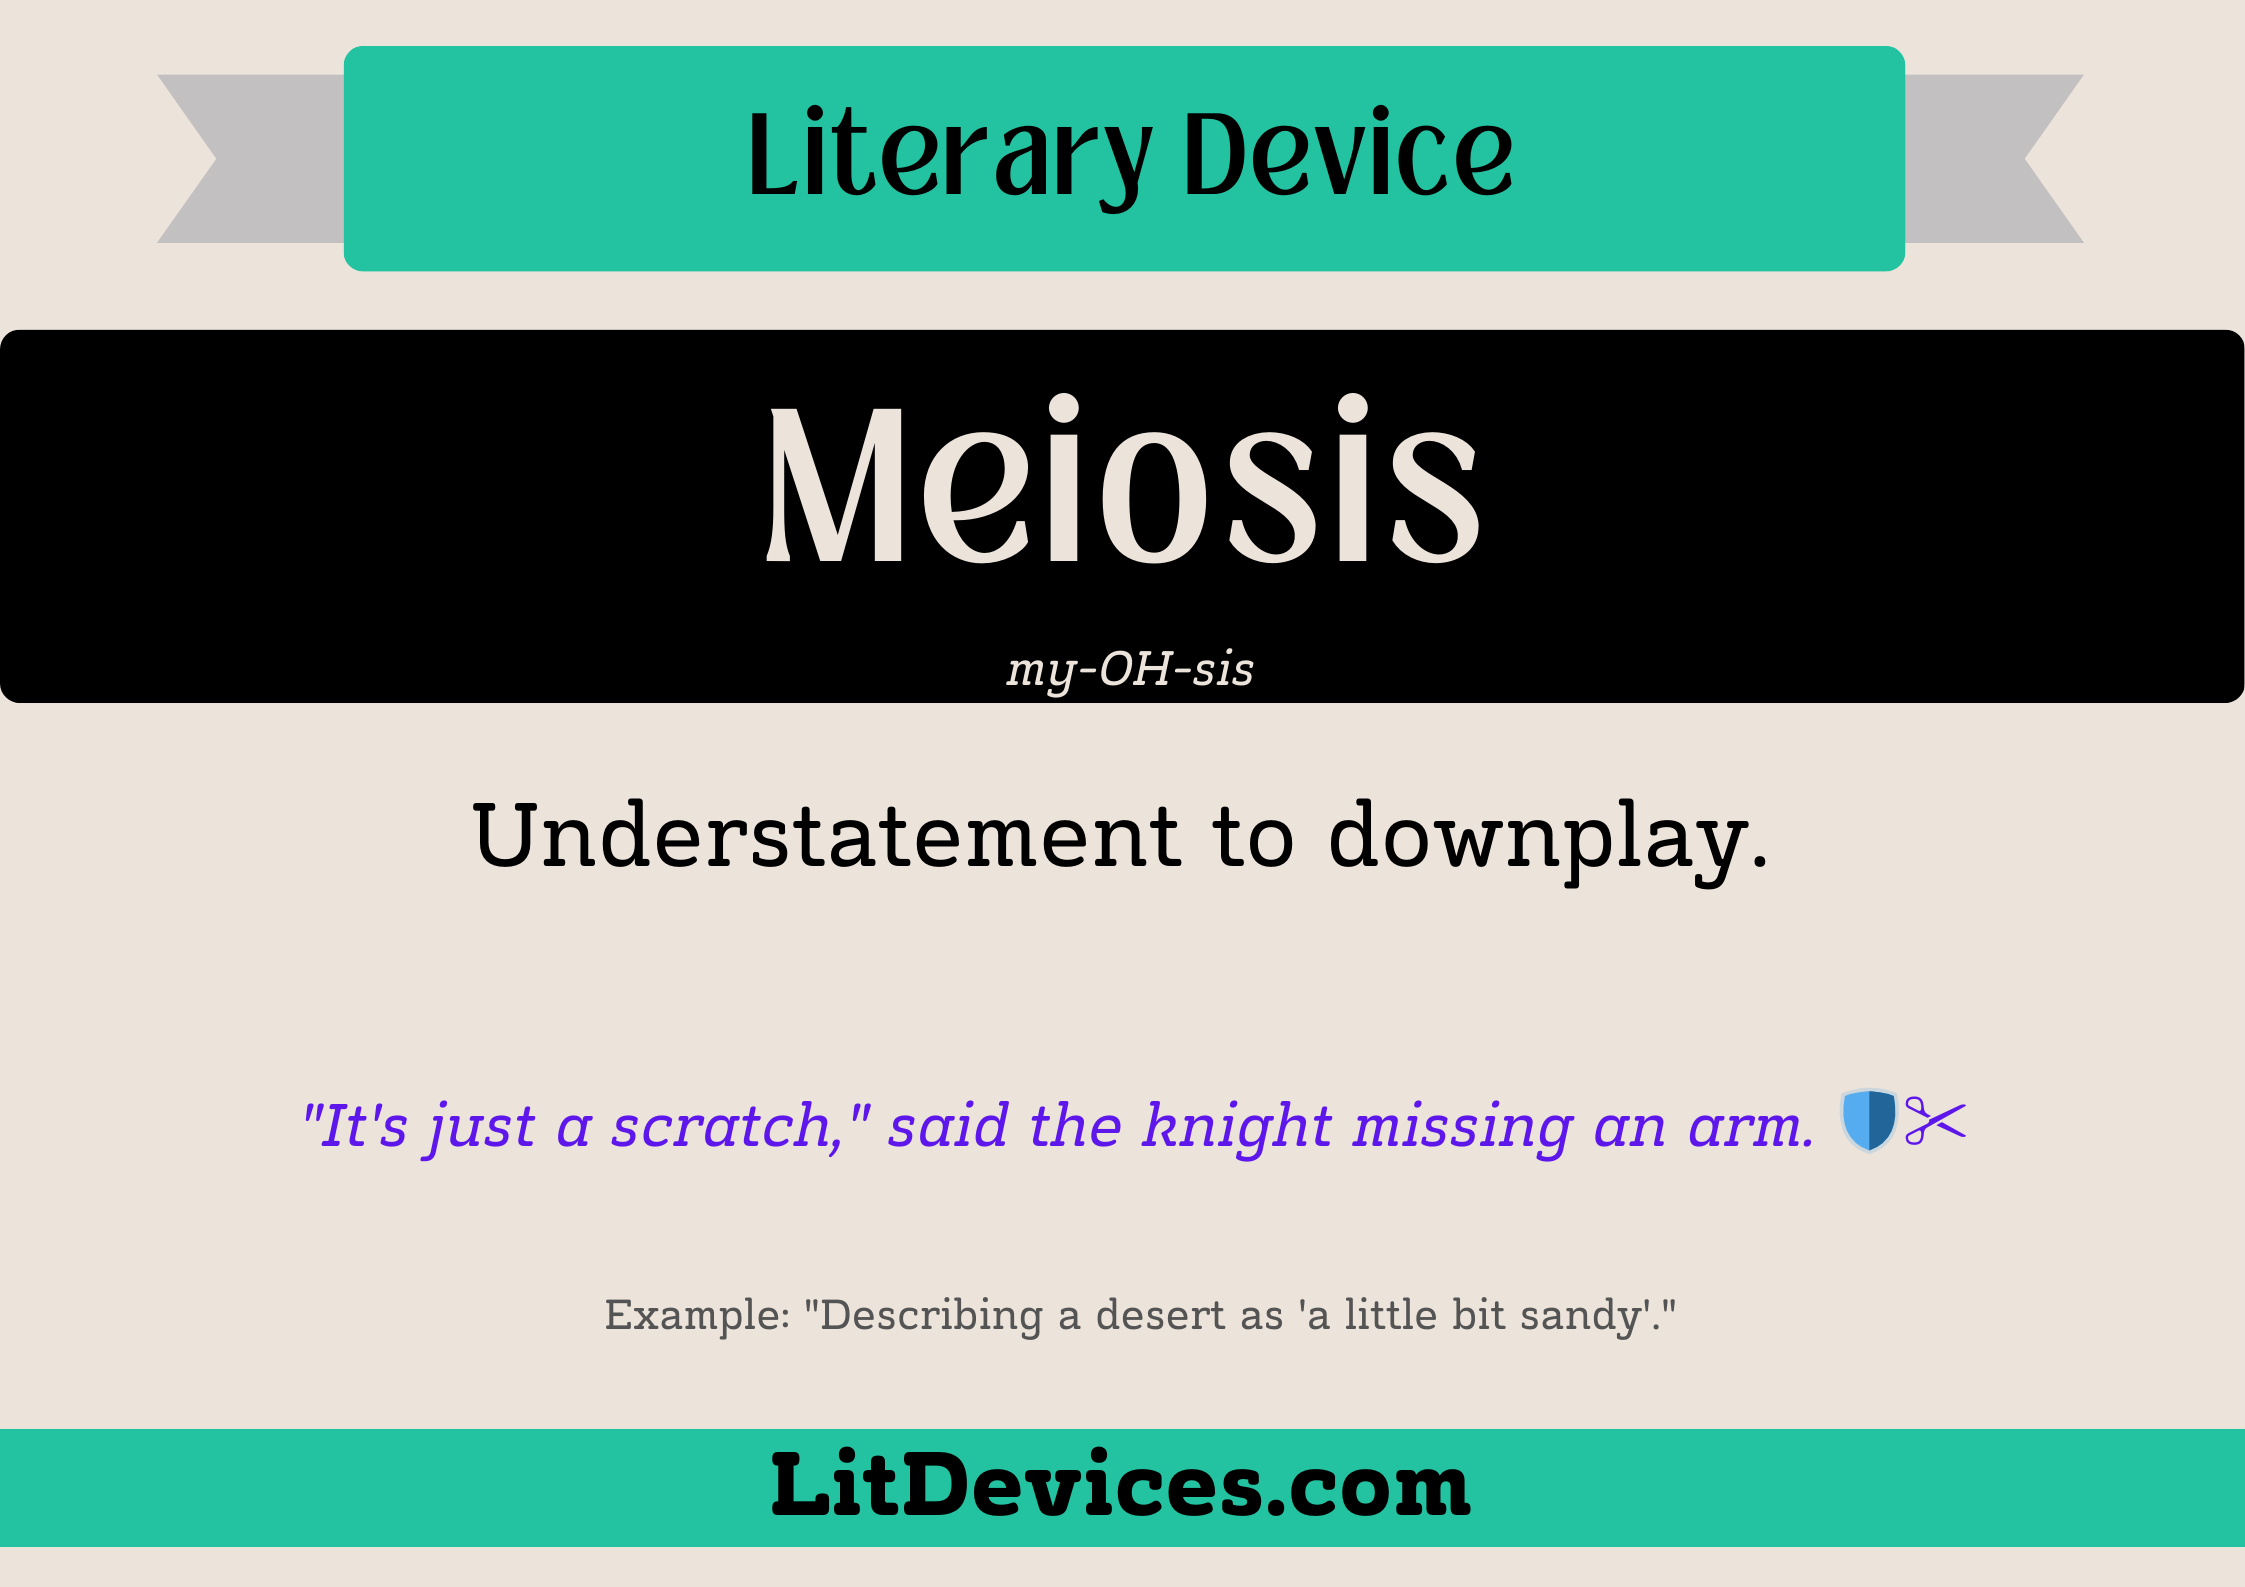 meiosis literary device